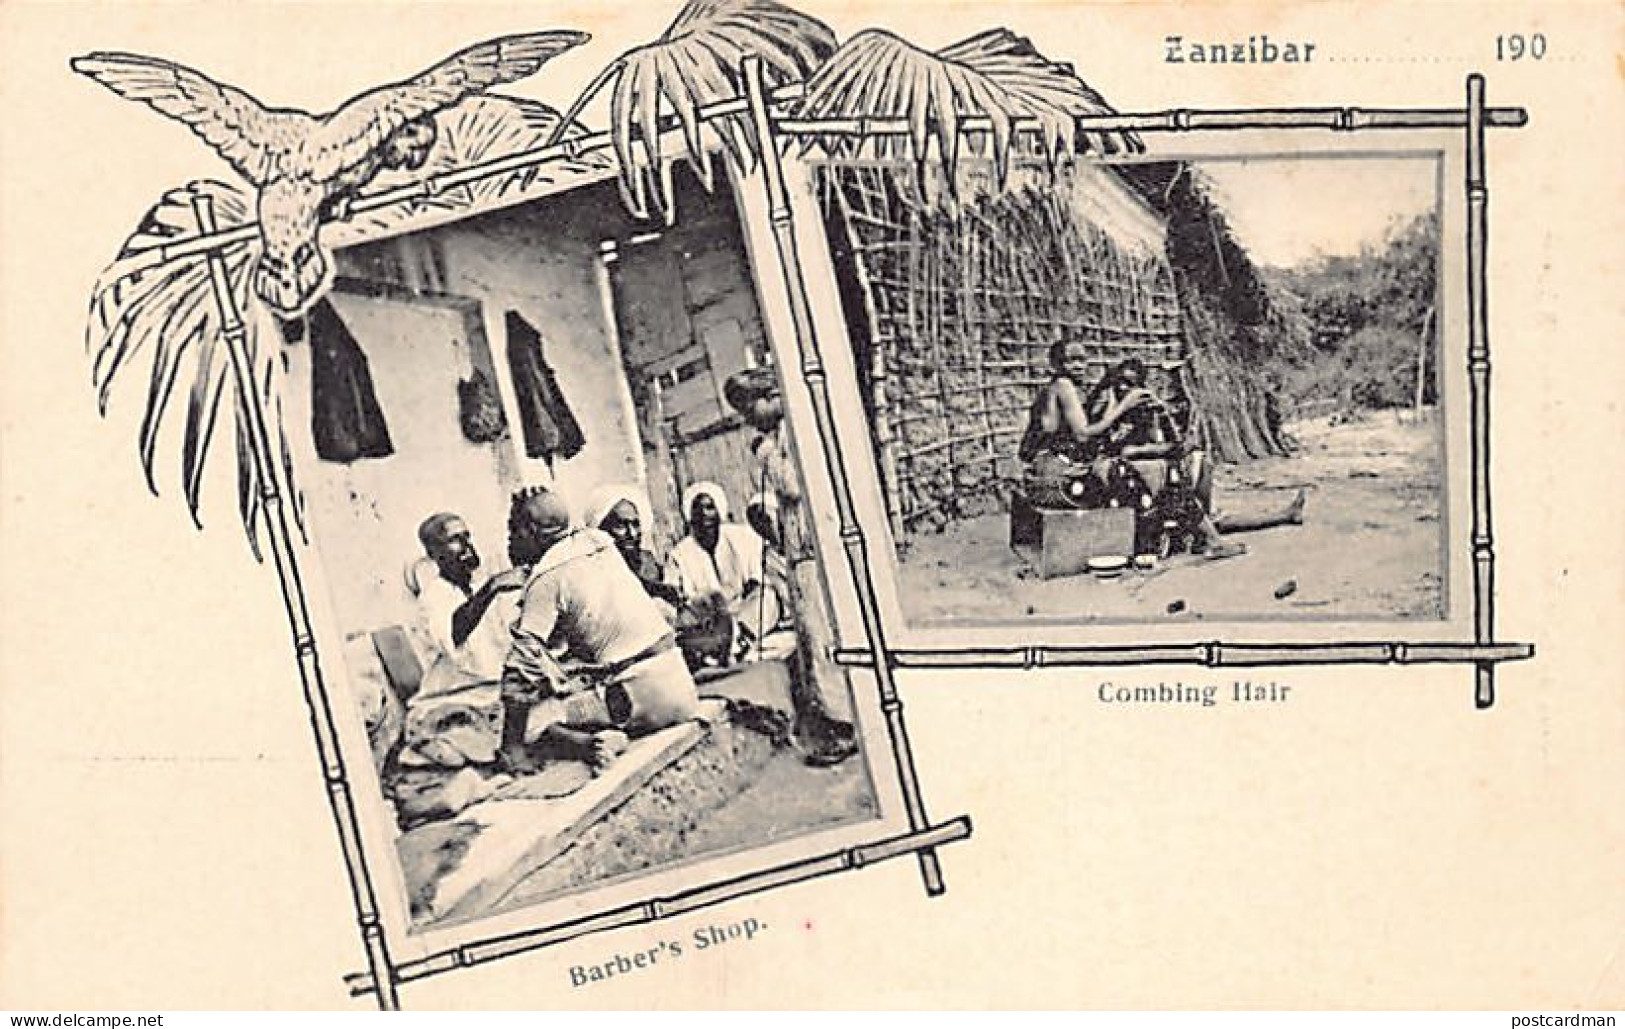 Tanzania - ZANZIBAR - Barber's Shop - Combing Hair - Publ. Pereira De Lord Brothers 25 - Tansania